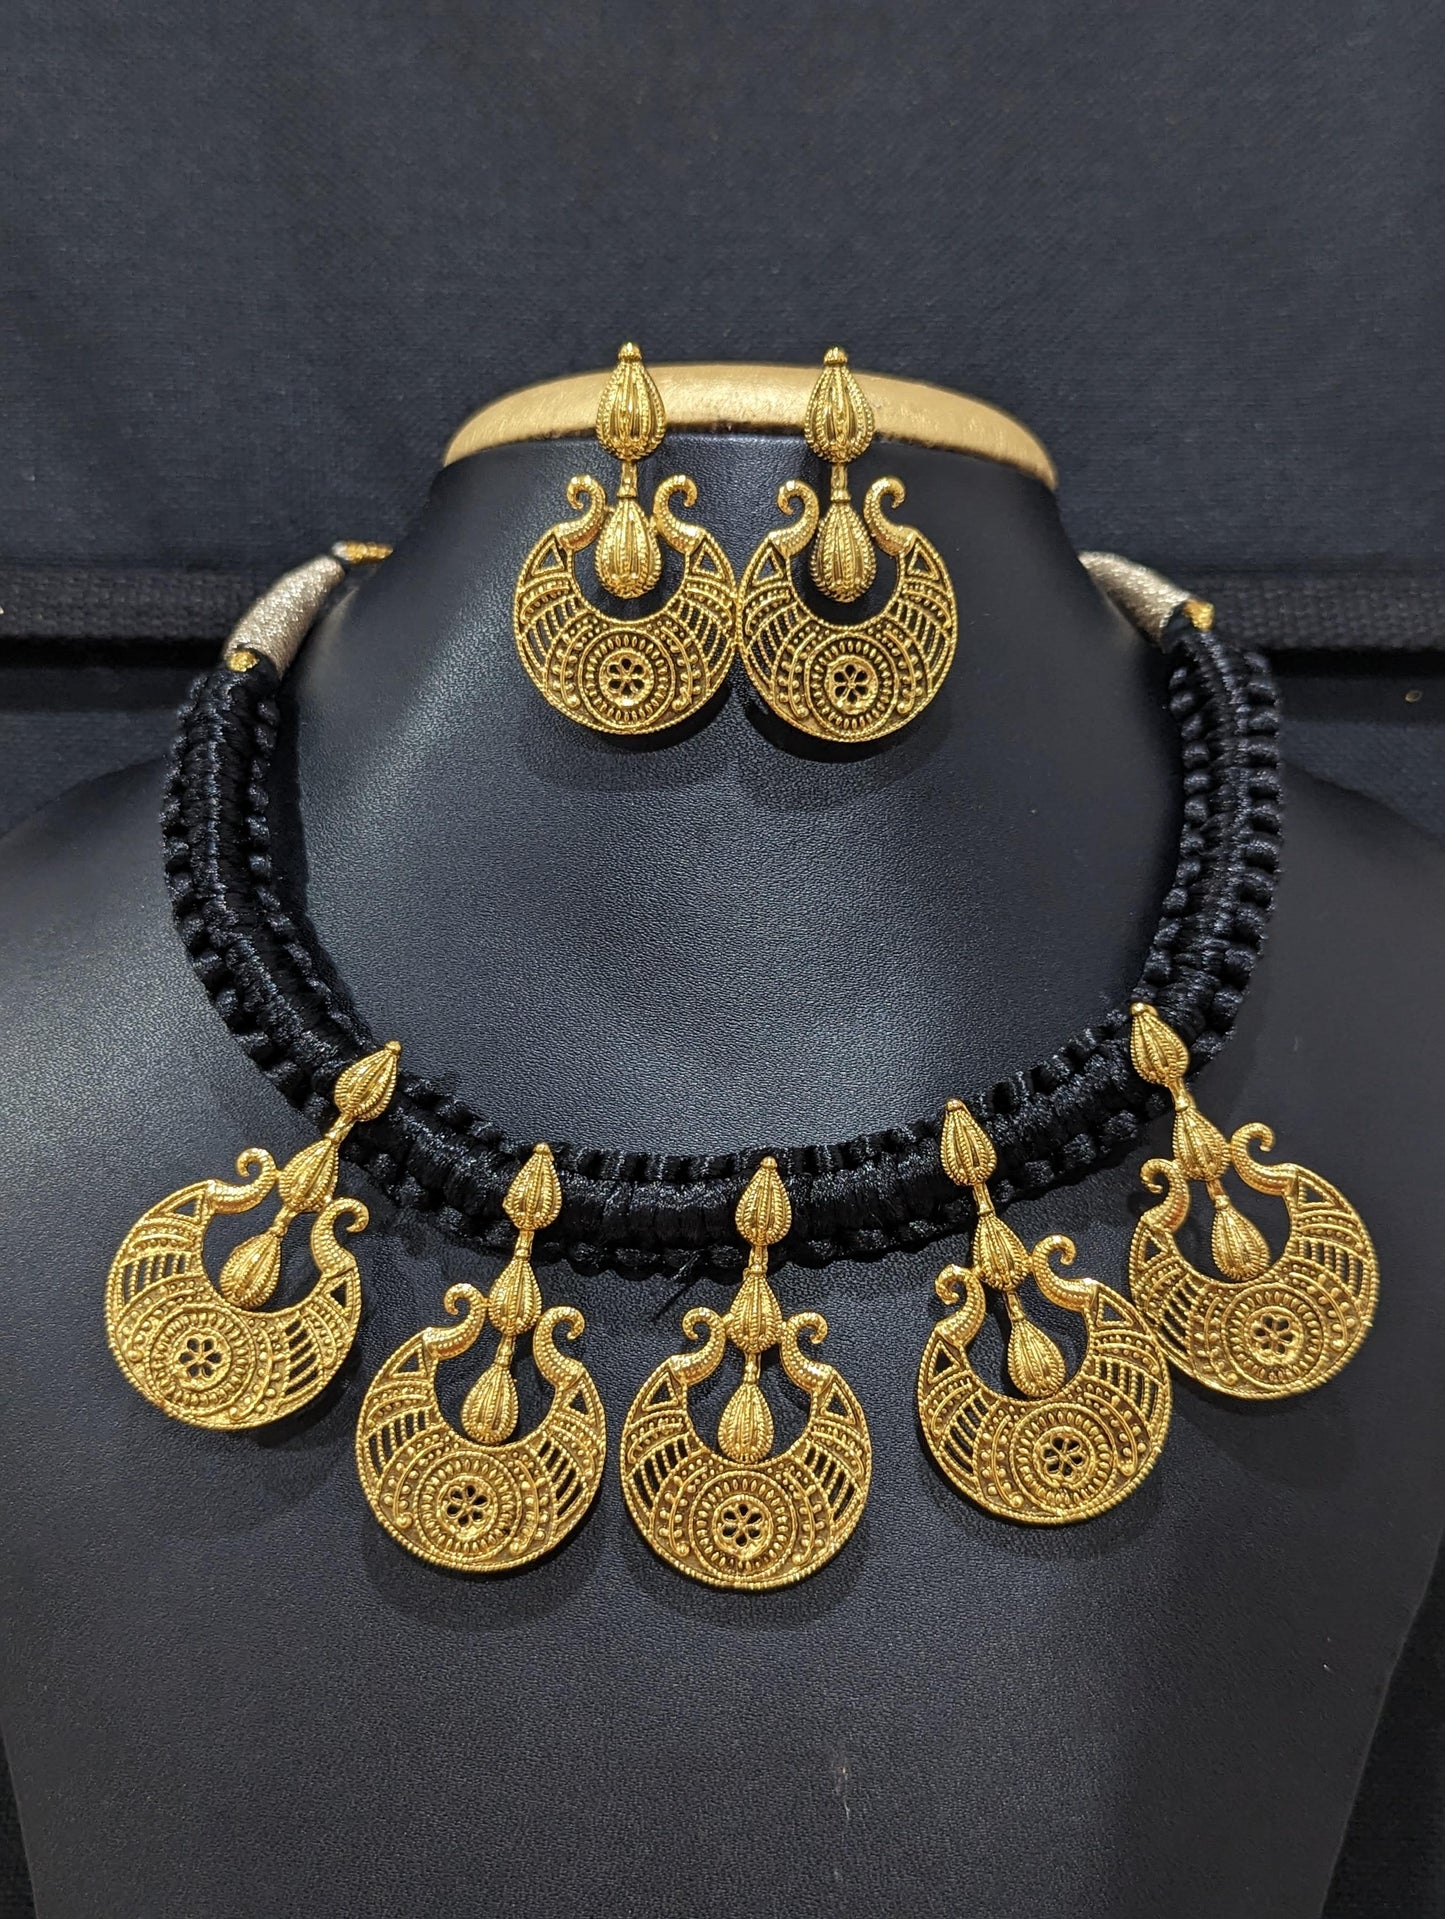 Cotton dori thread Necklace with Chandbali Charm Jewelry Set